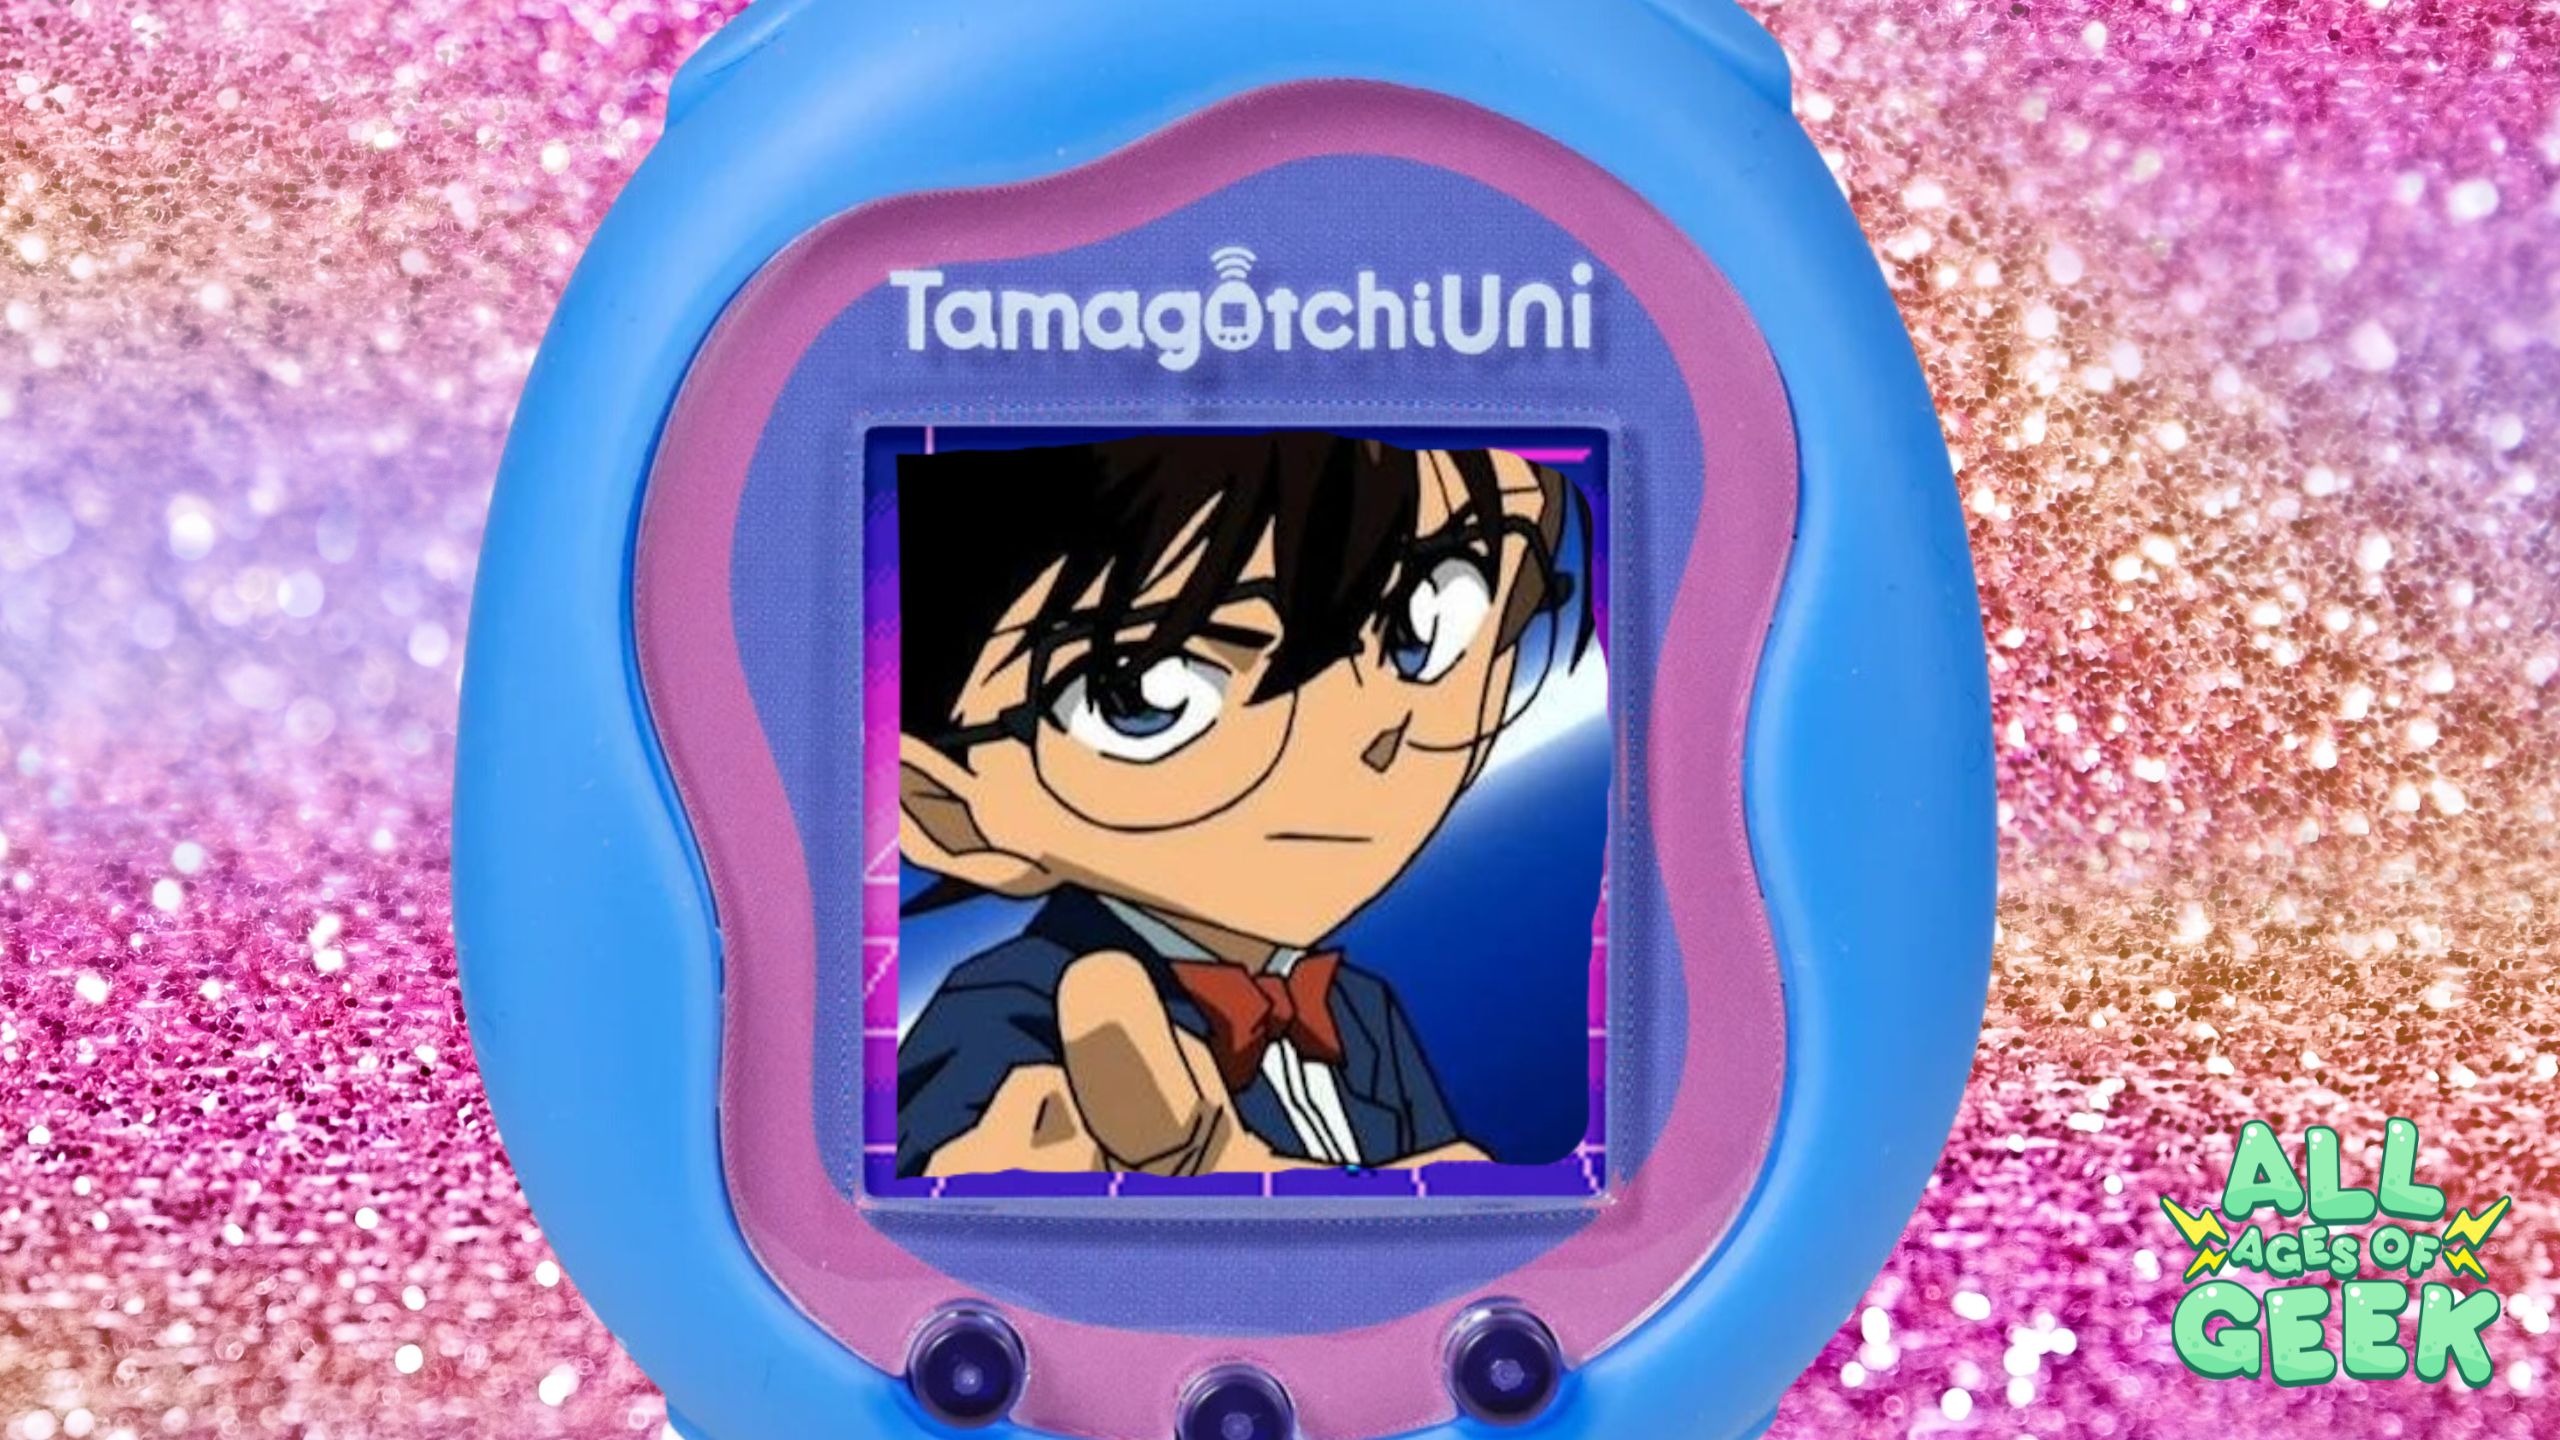 New Detective Conan Tamagotchi Announced by Bandai